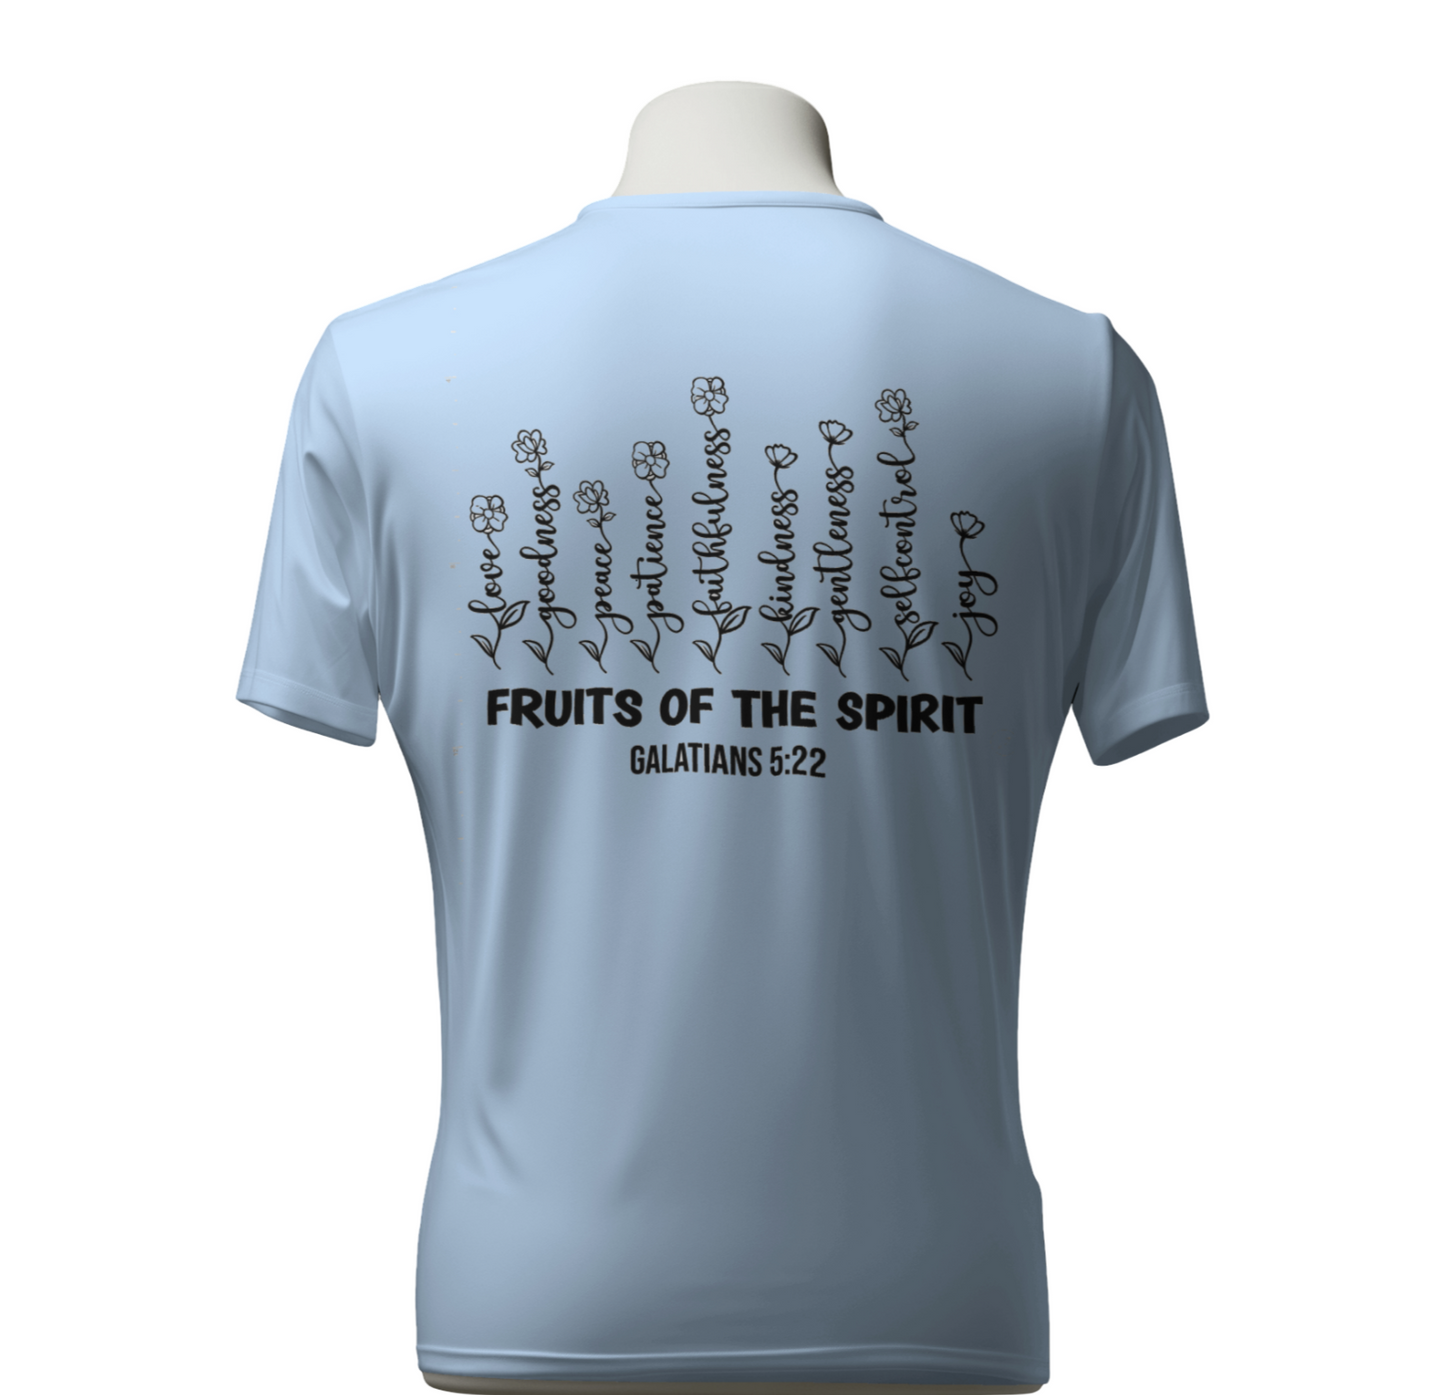 Fruits of the Spirit T-Shirt